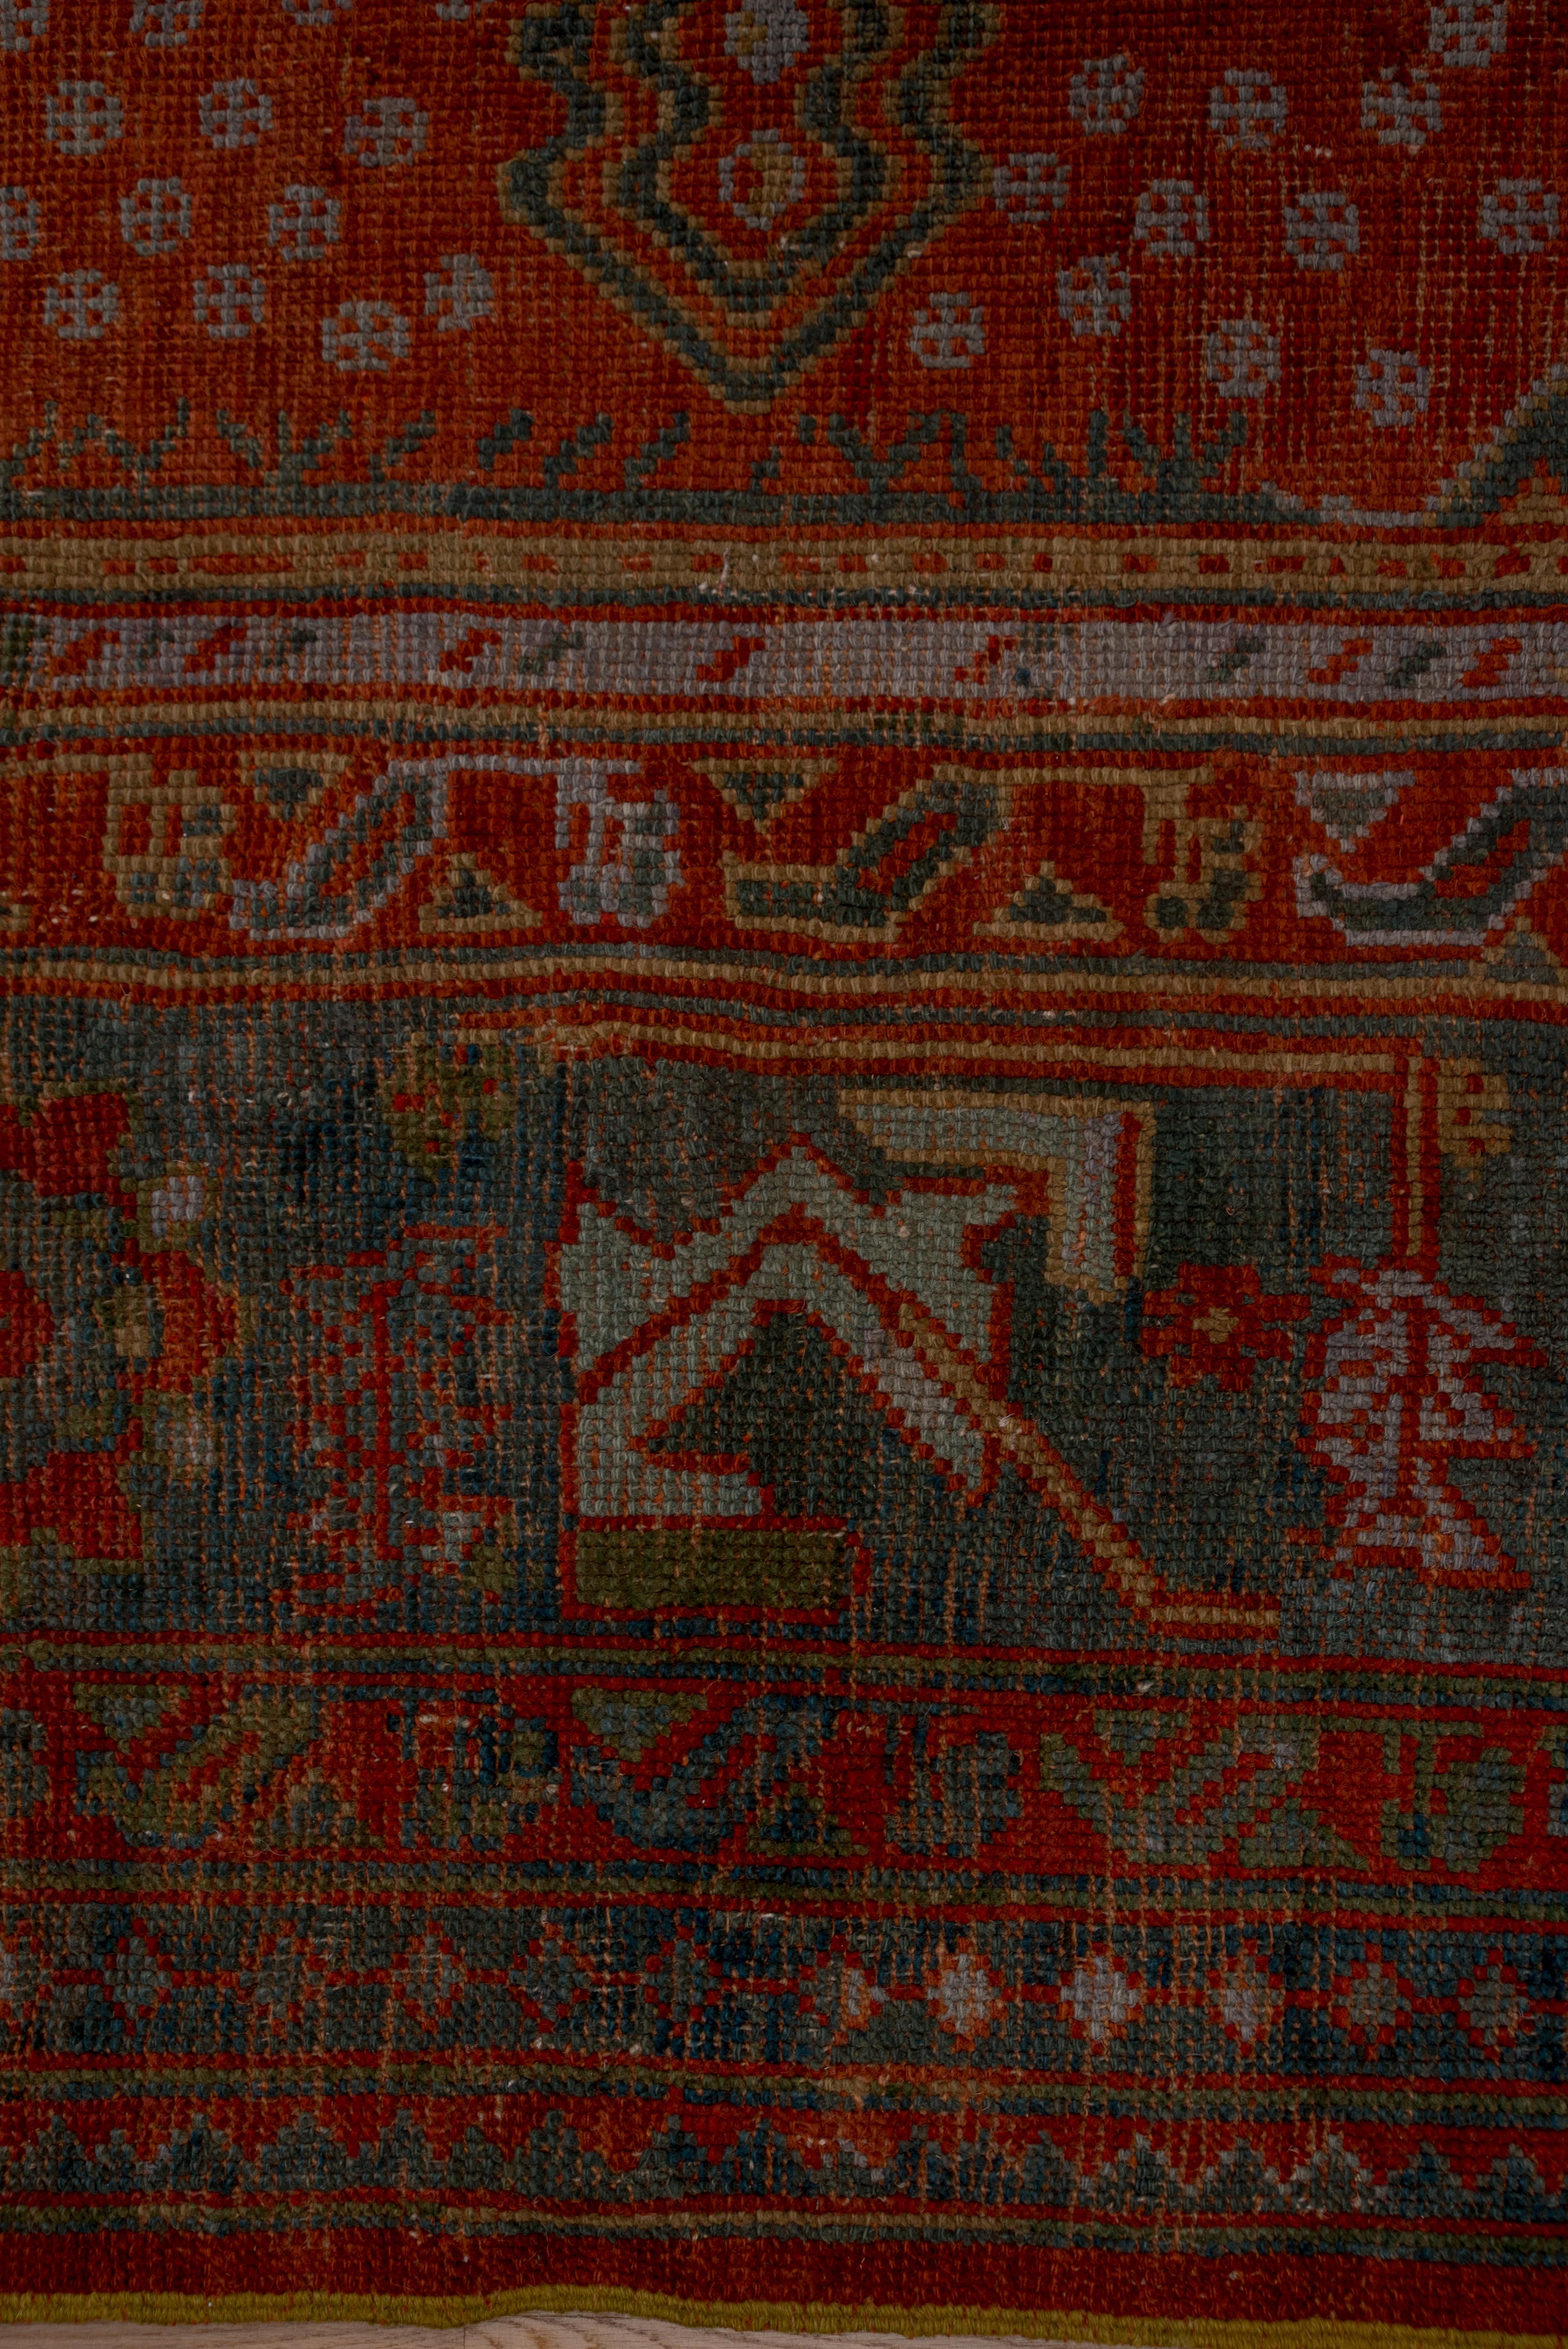 Antique Turkish Oushak Large Carpet, Orange & Teal Palette, Circa 1920s For Sale 1